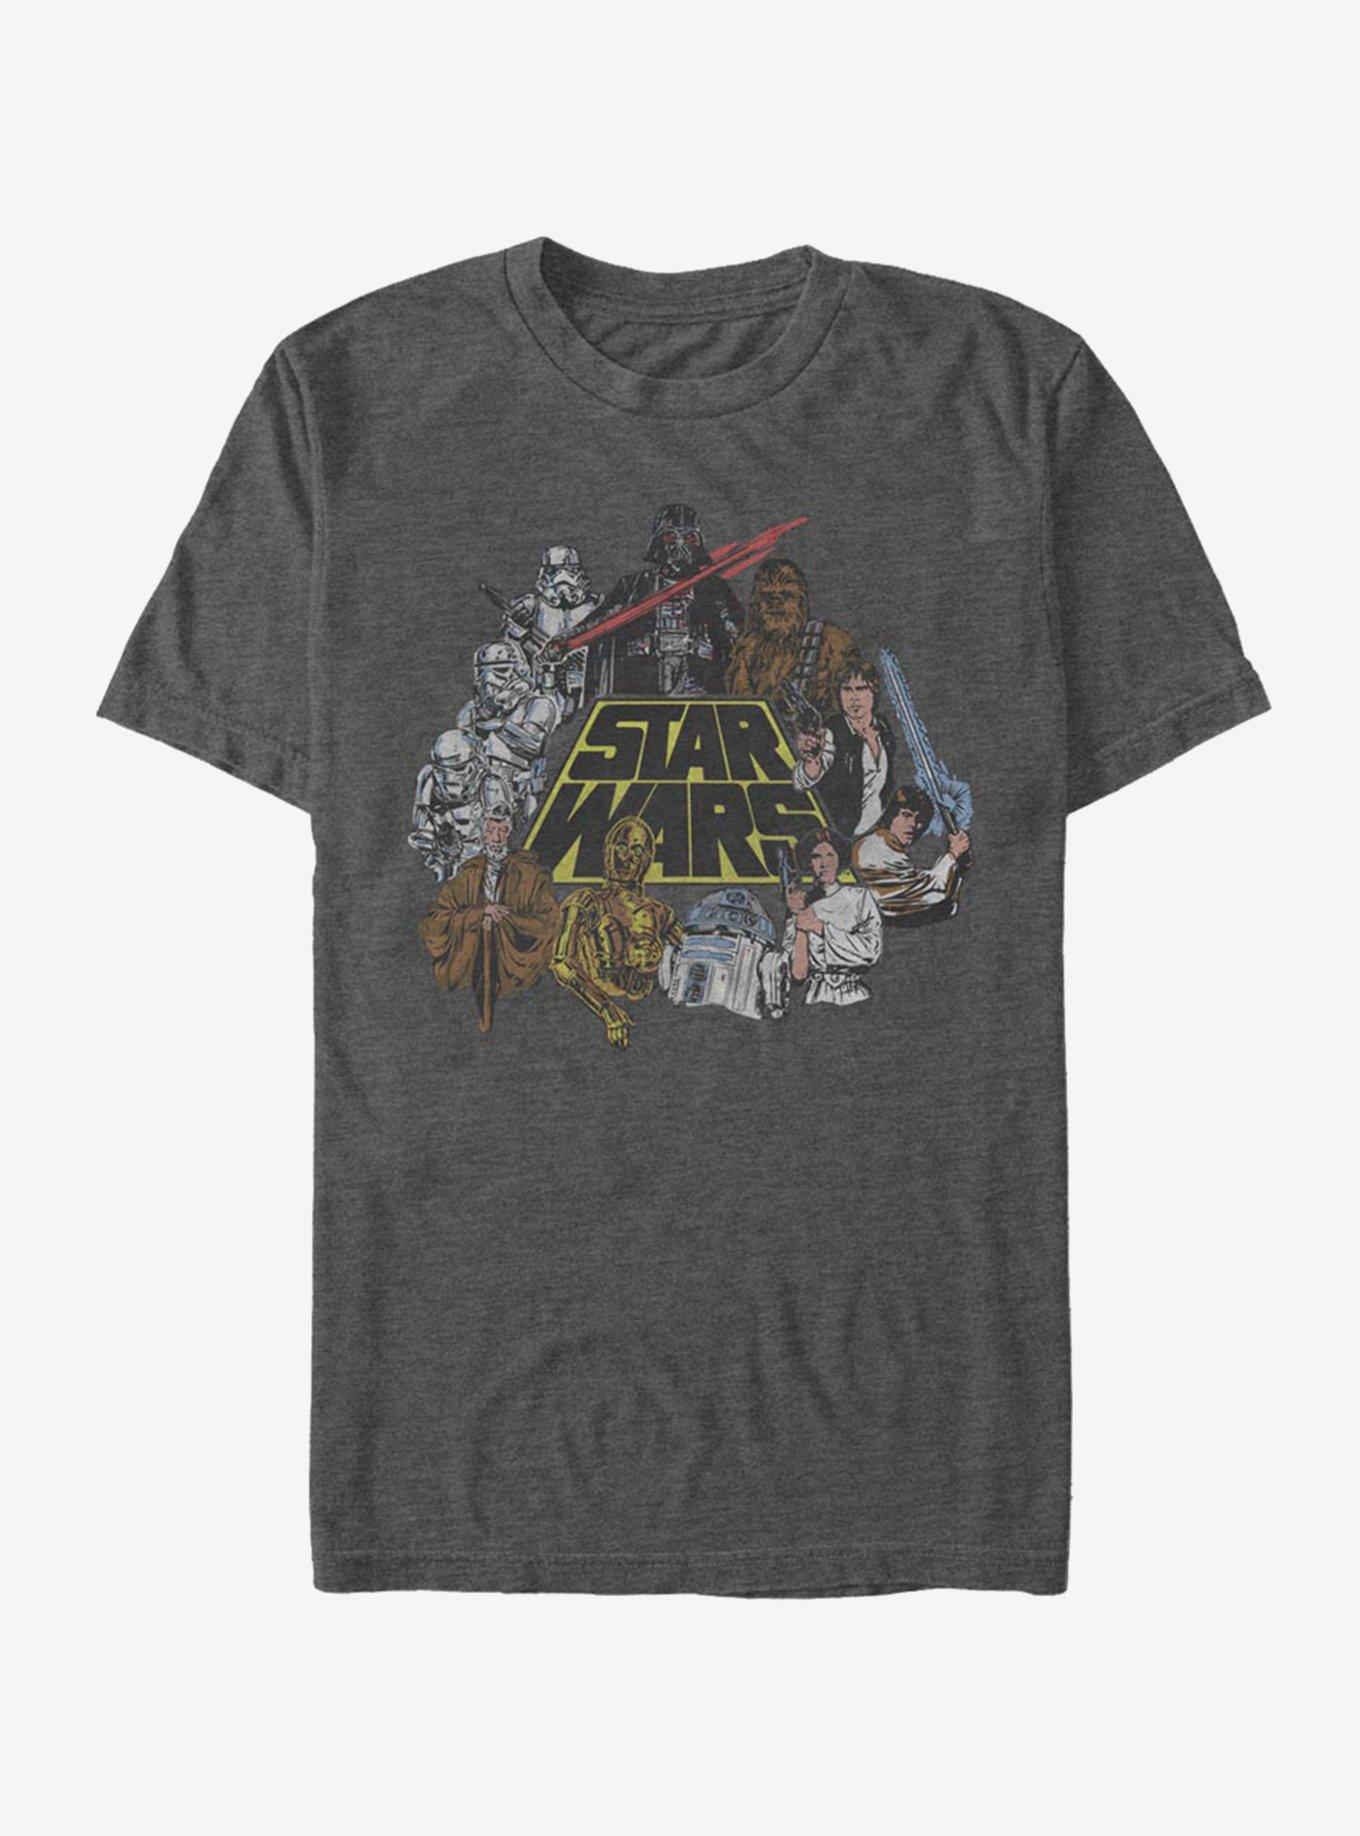 Star Wars Color T-Shirt